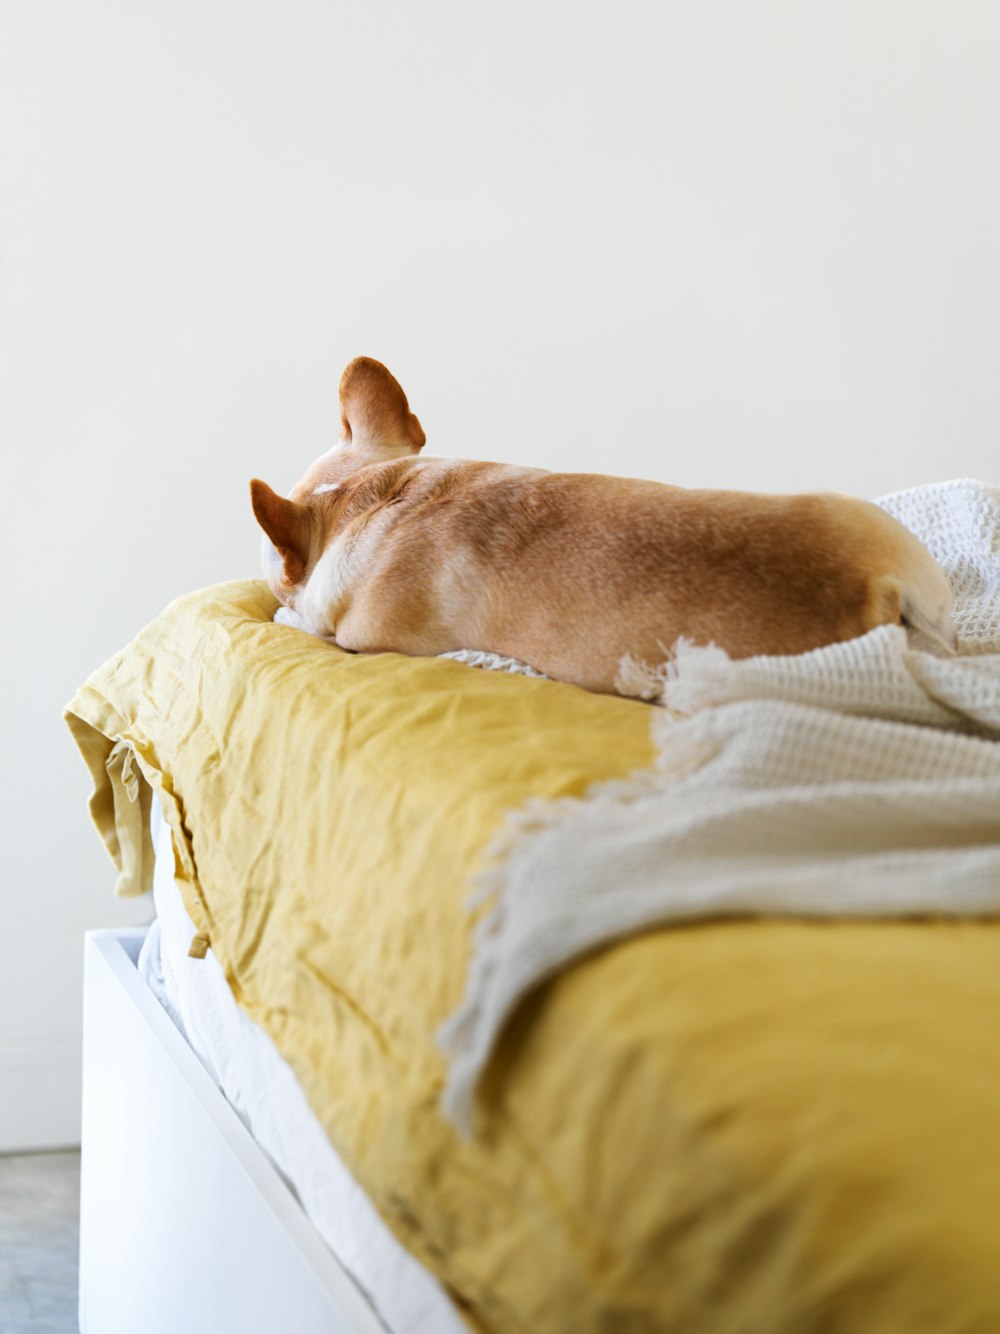 dog sleeping on a bed